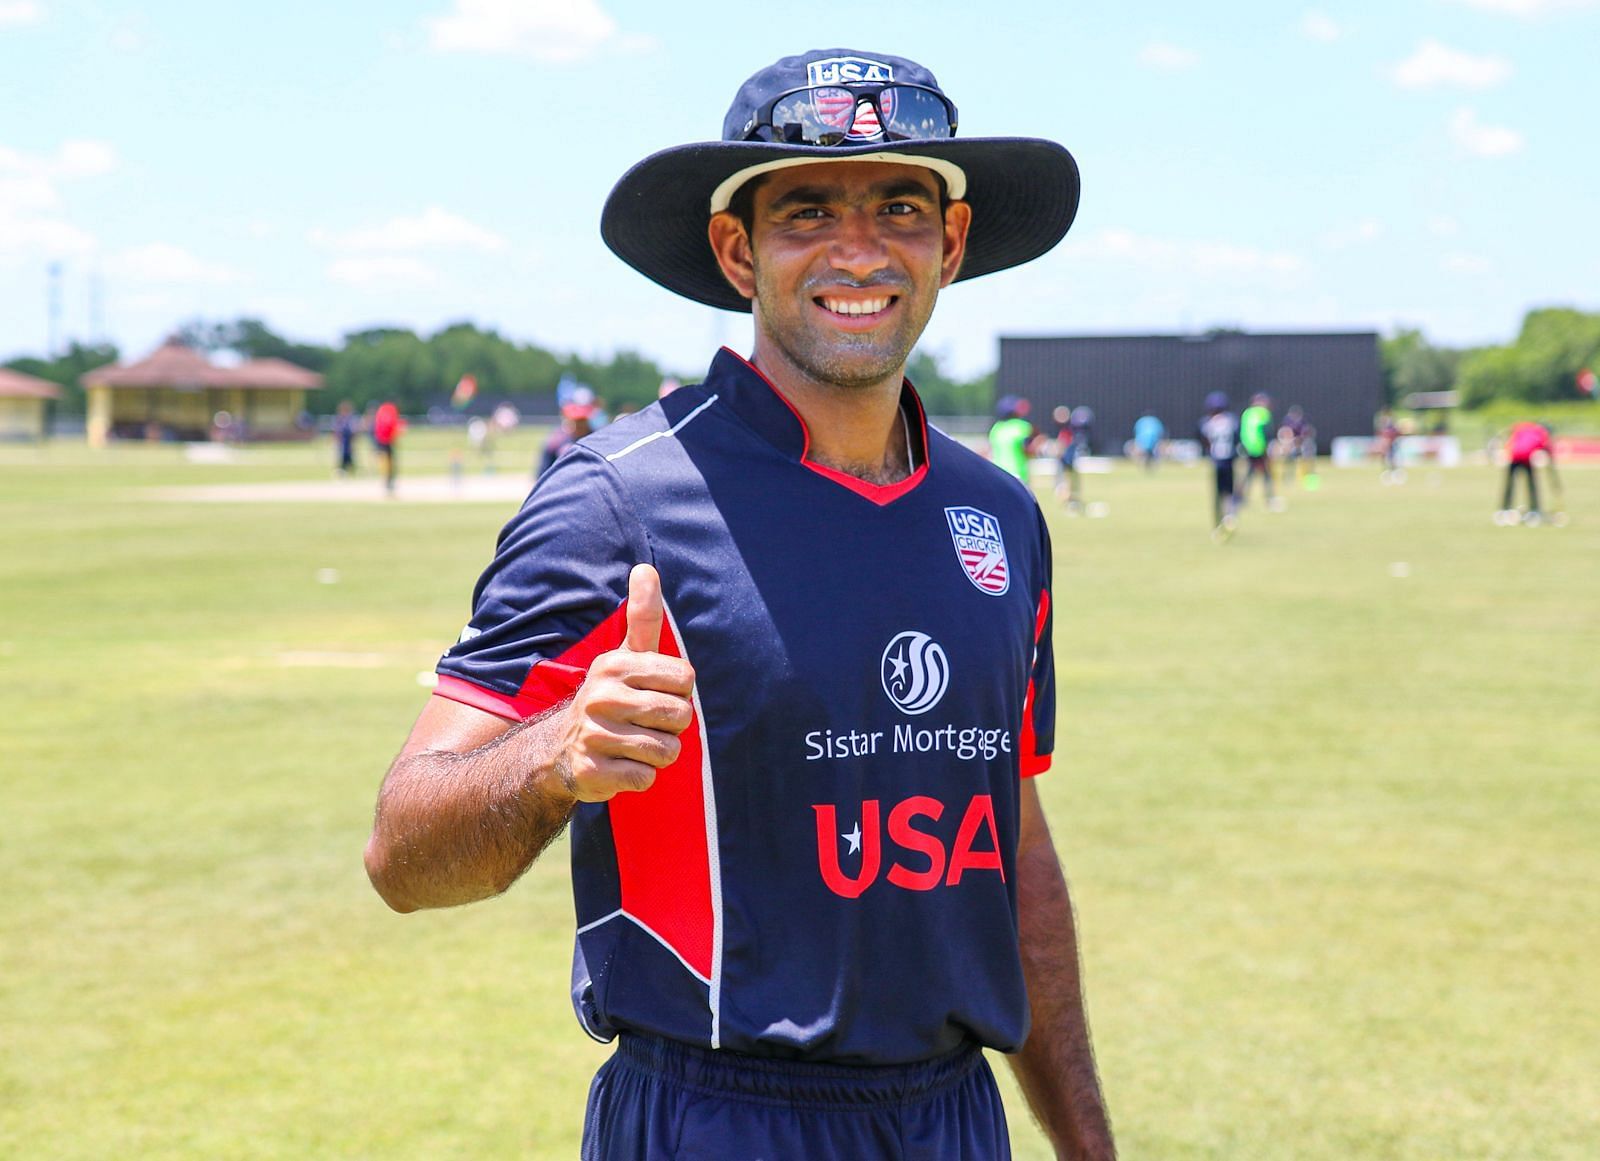 Saurabh Netravalkar of the USA. (Photo Credits: USA Cricket)